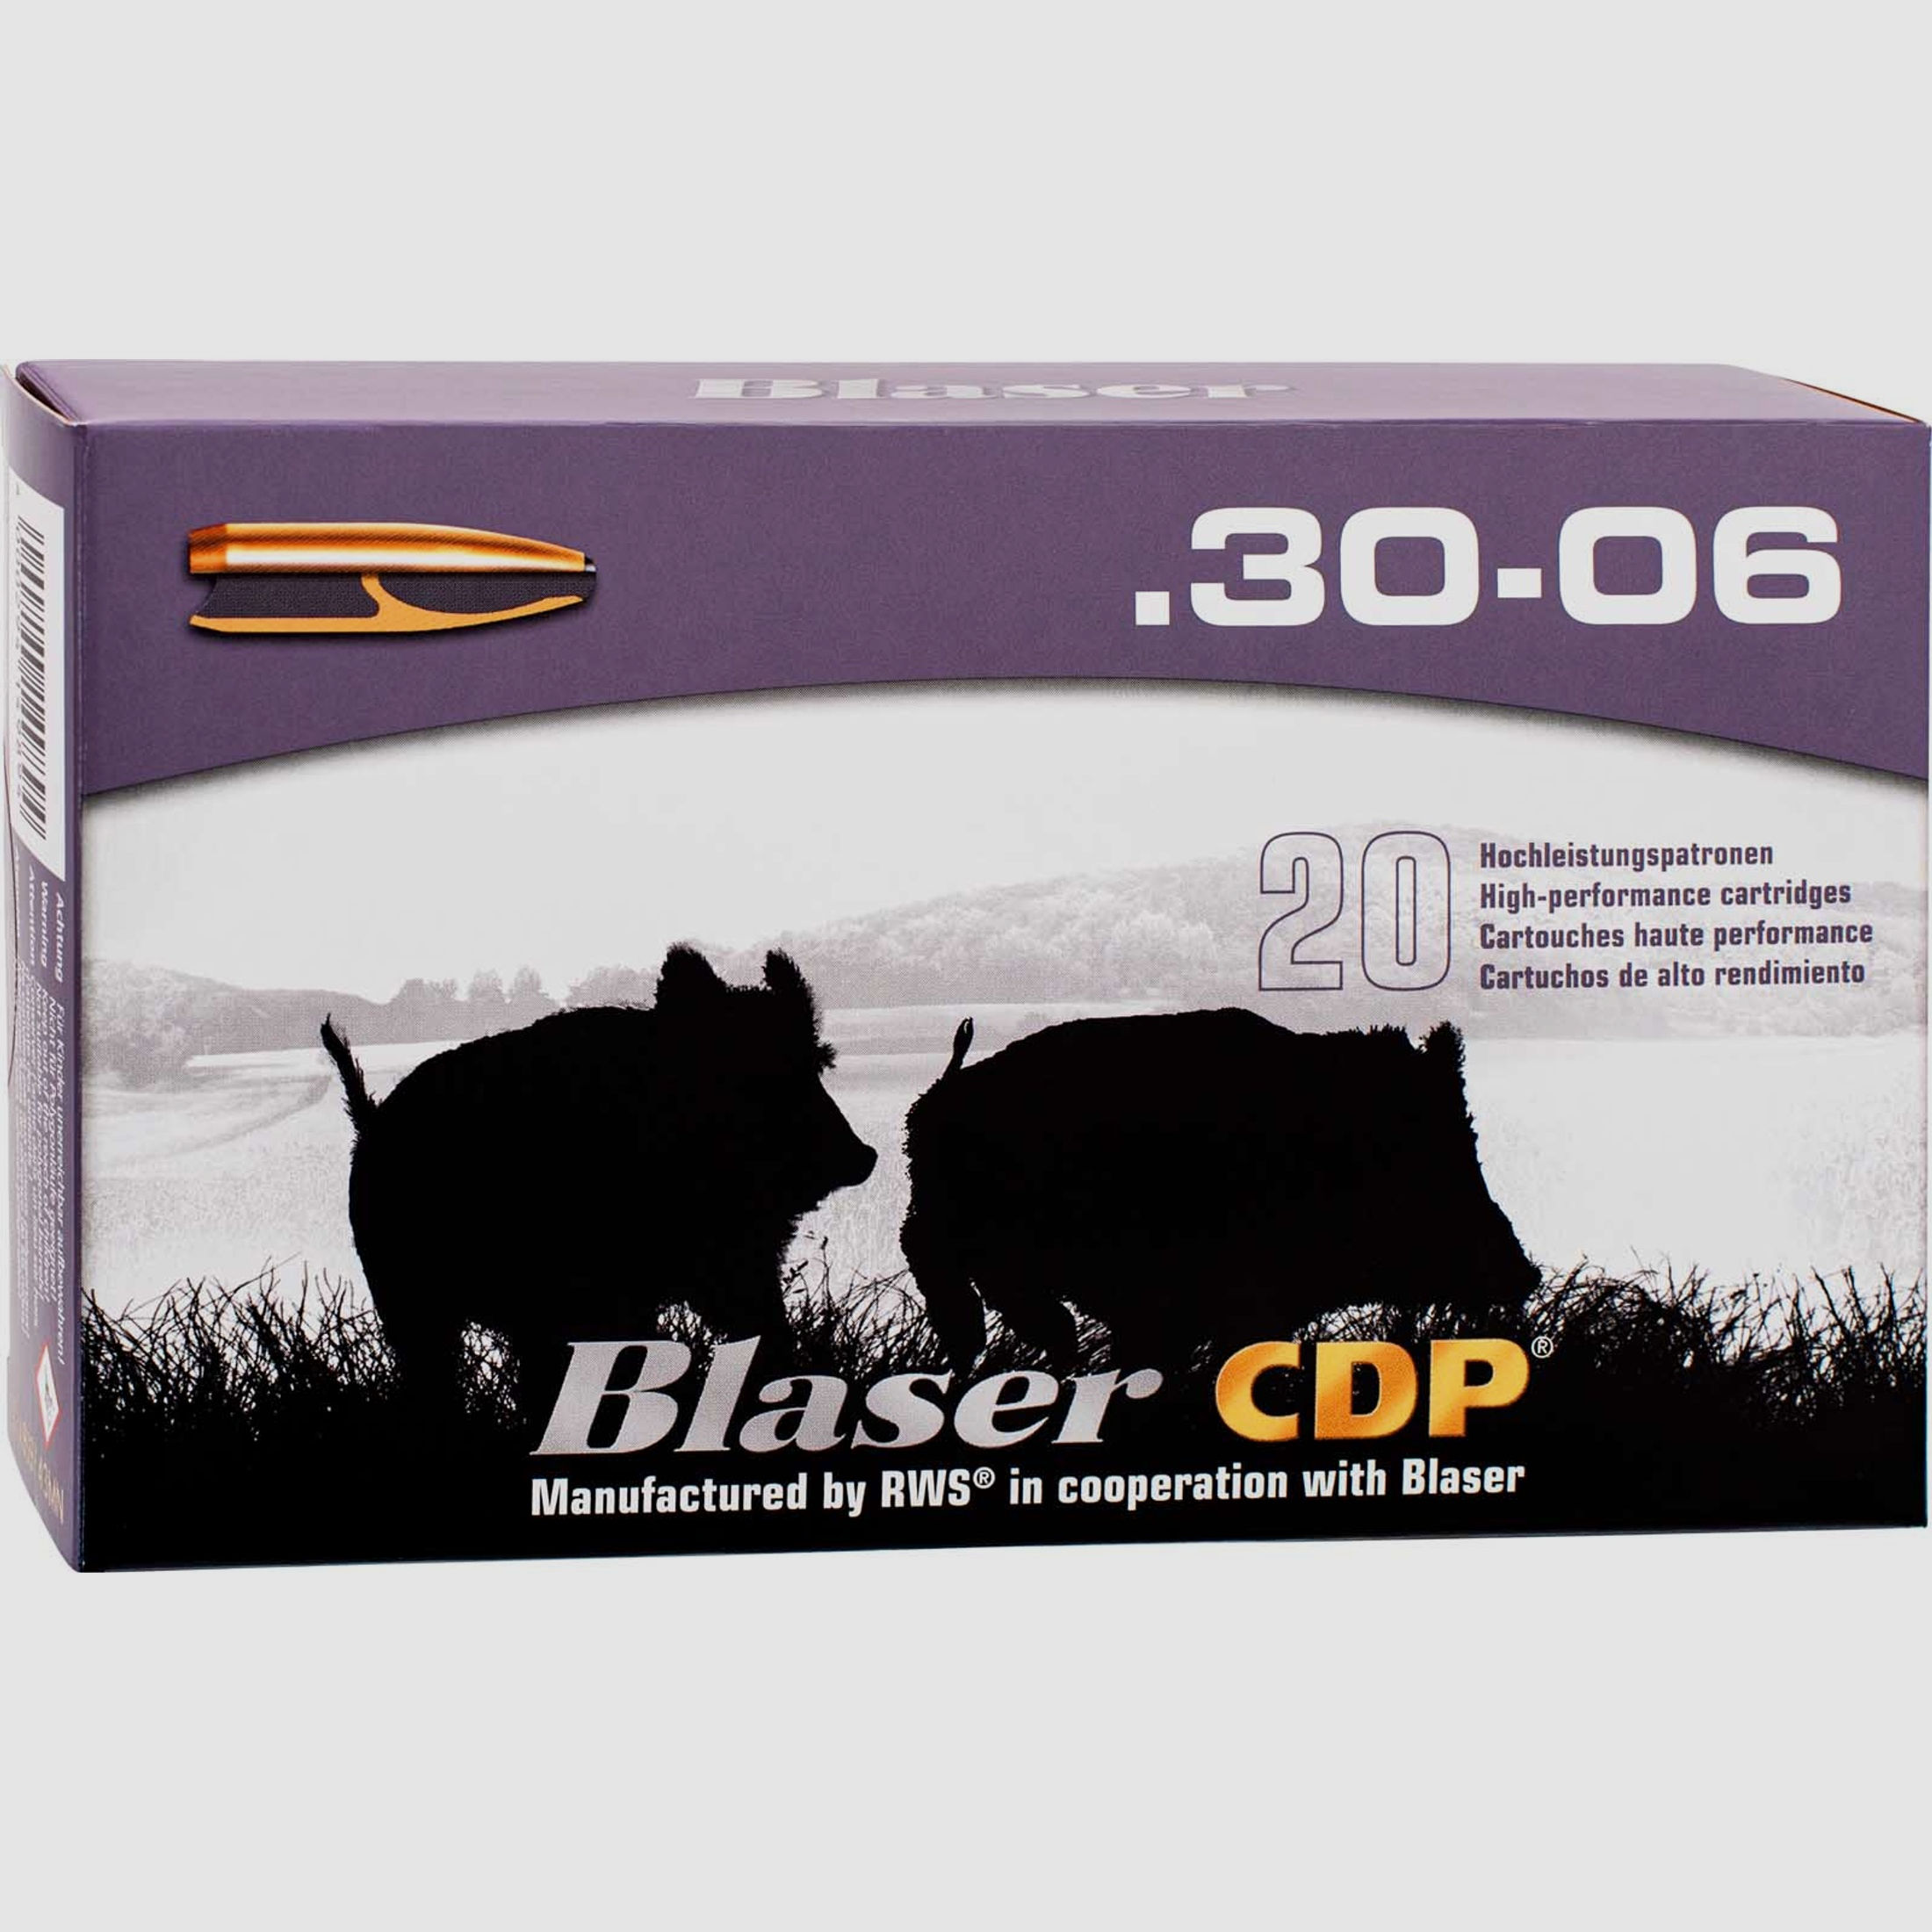 Blaser .30-06Spring CDP 10,7g - 165gr.